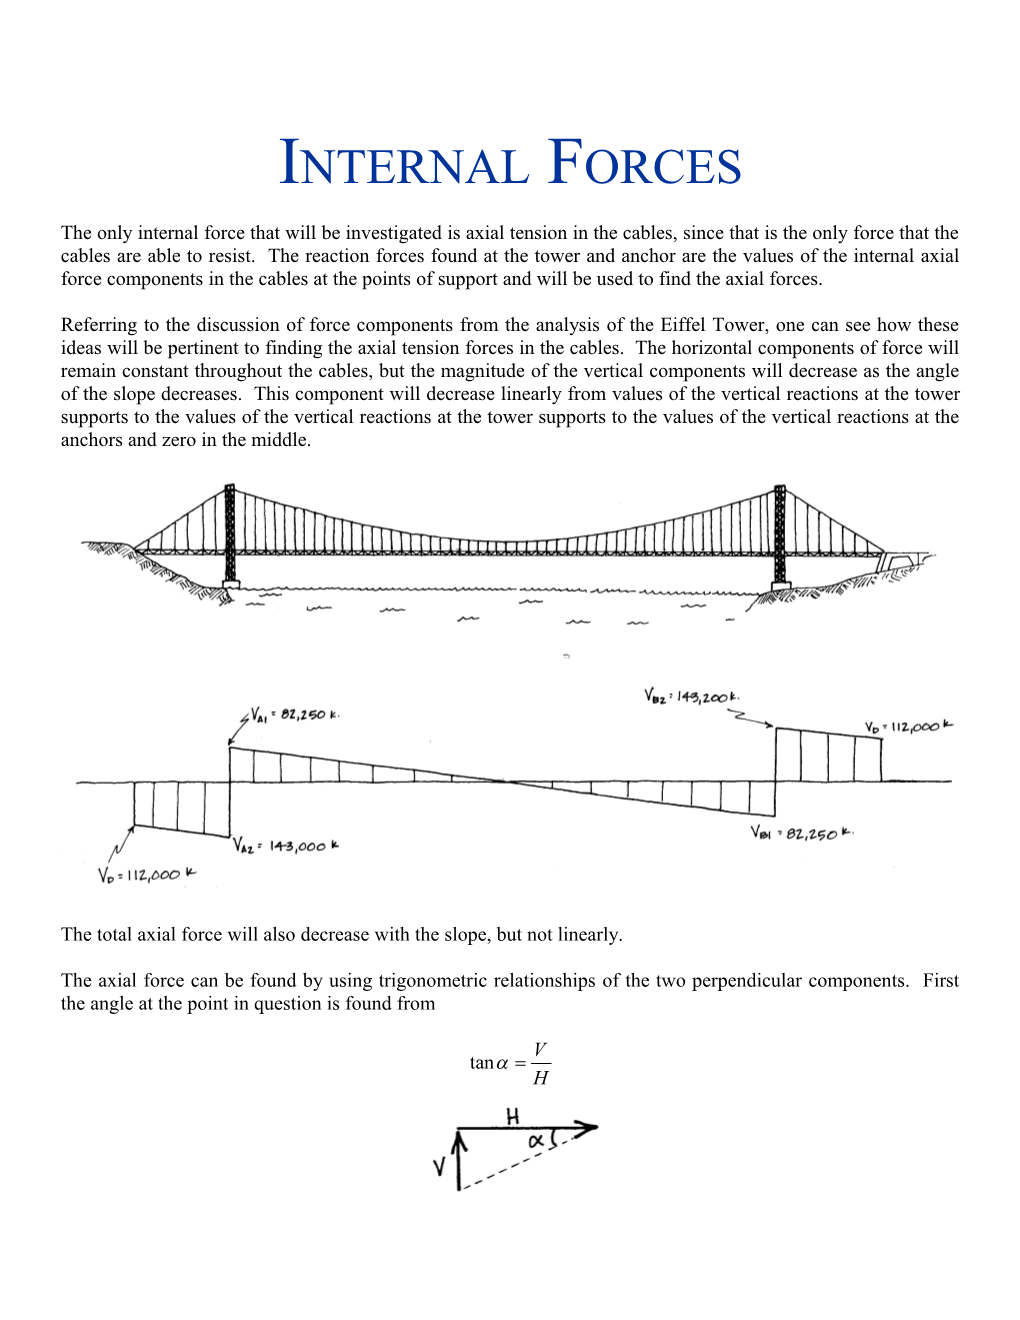 George Washington Bridge: Internal Forces